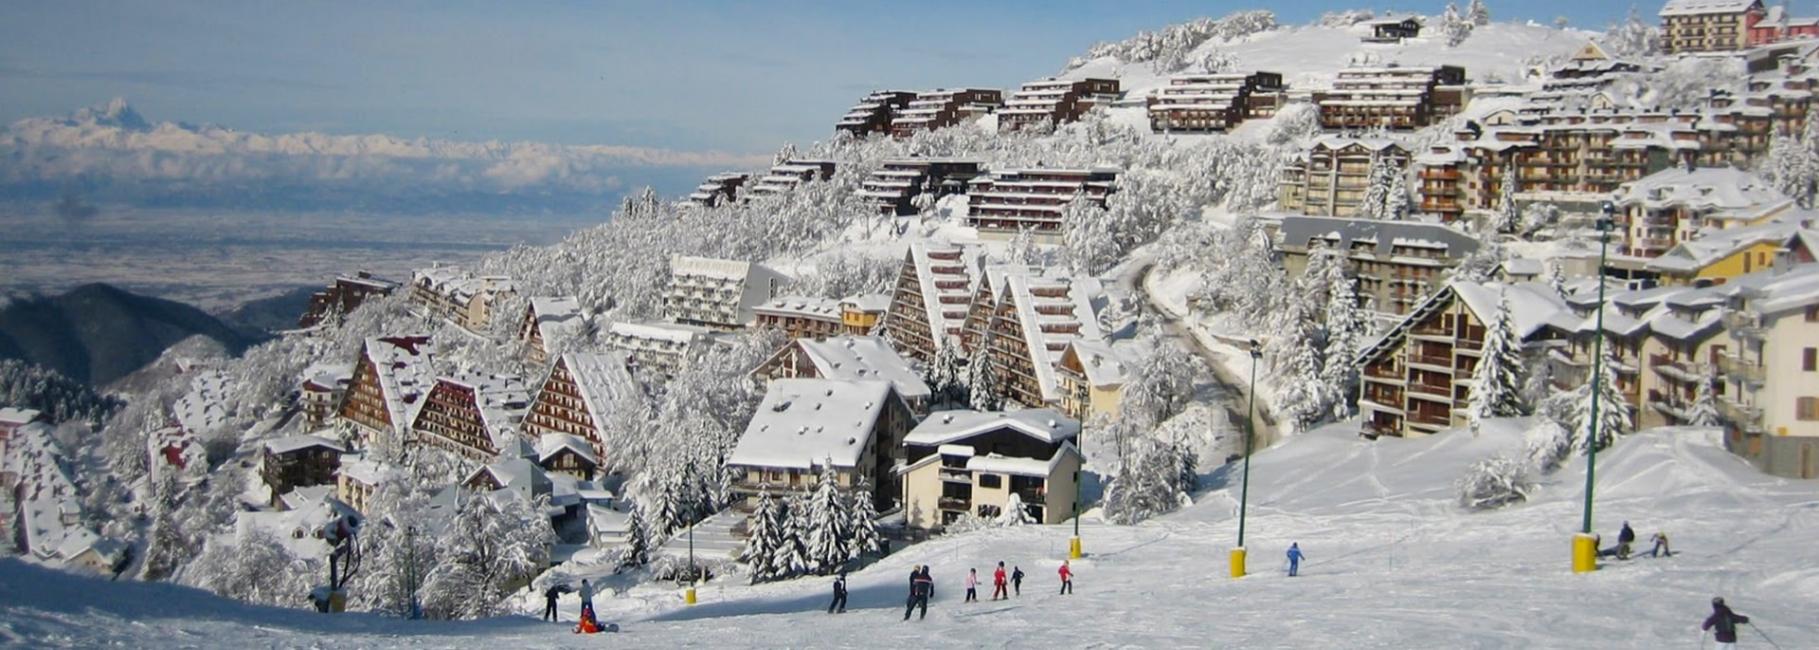 School Ski Trips To Prato Nevoso